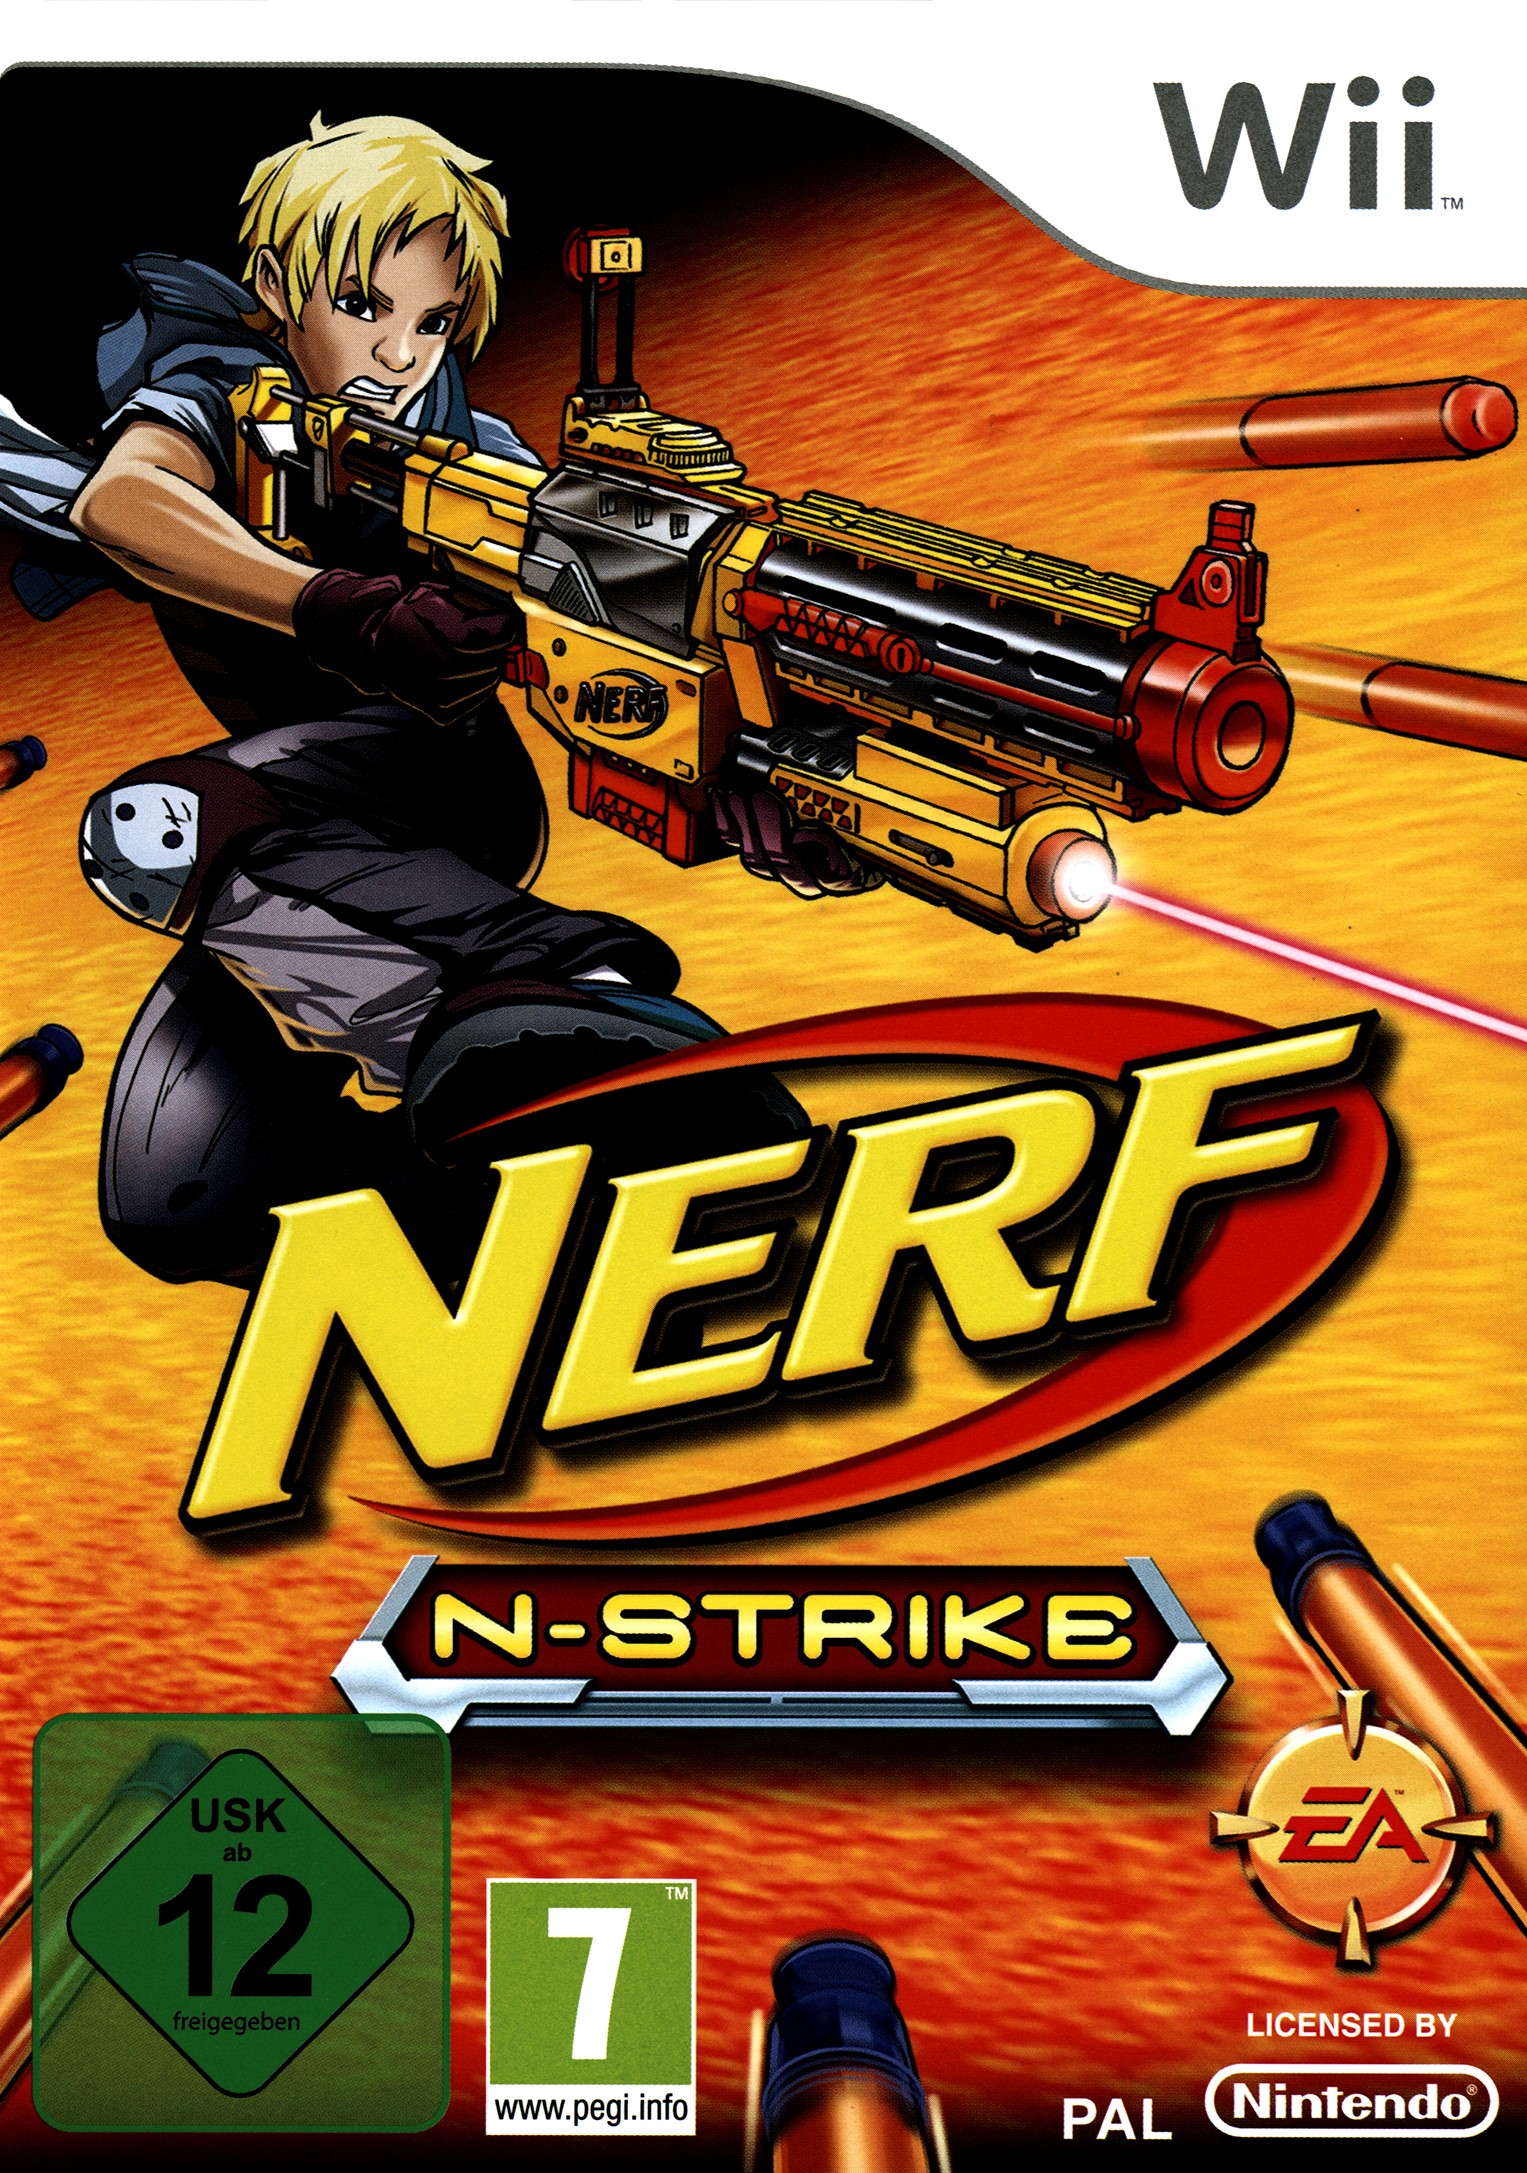 'Nerf N-Strike'